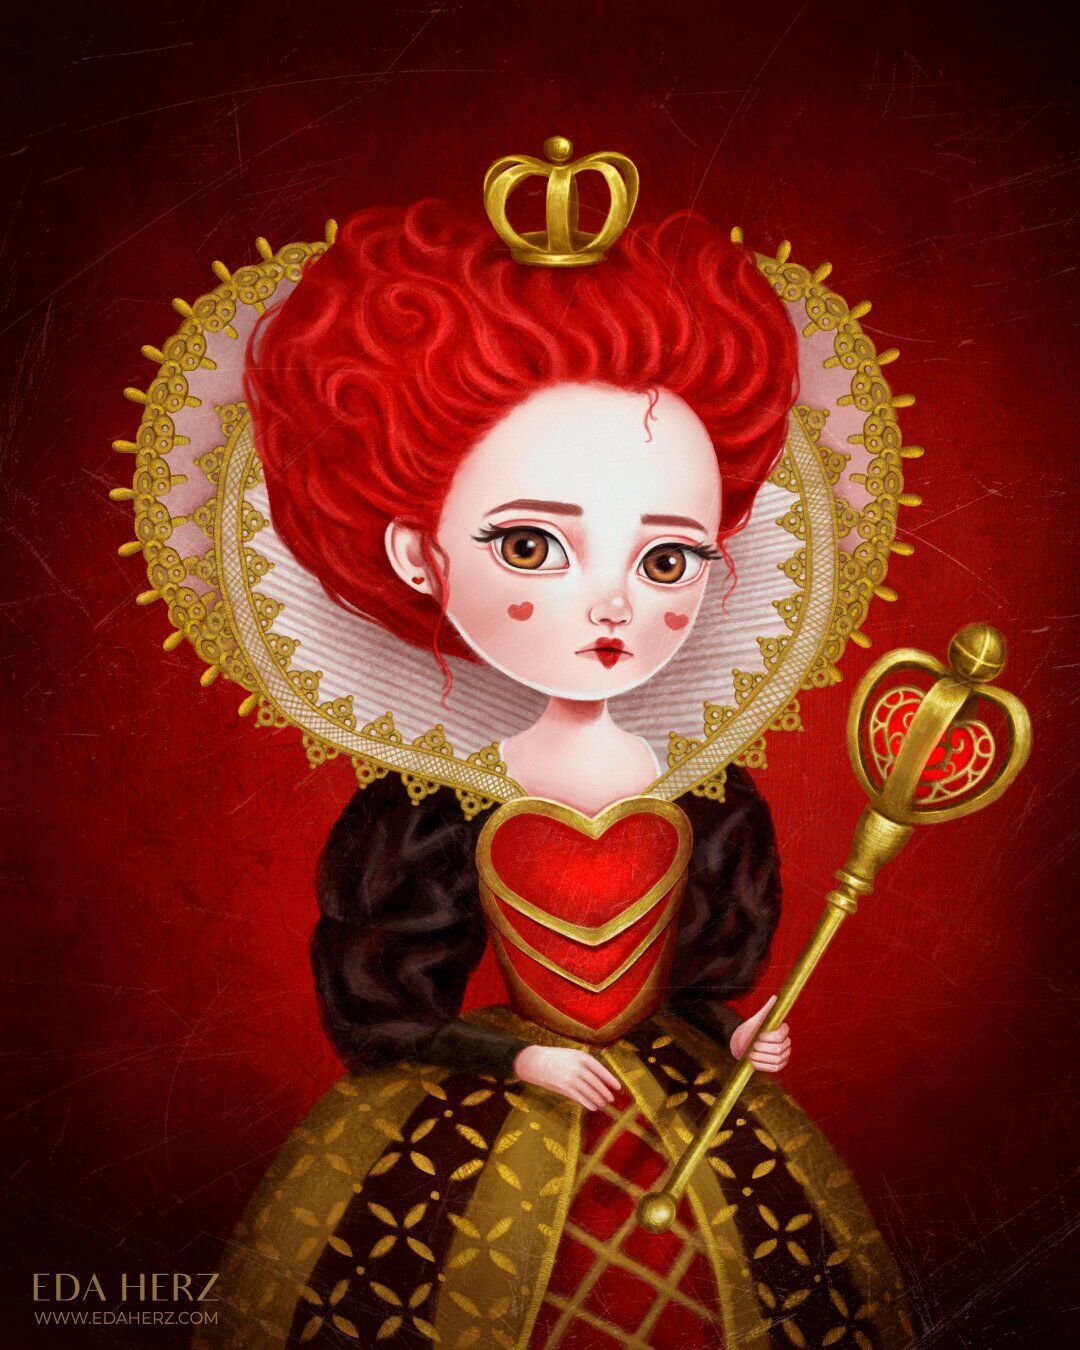 Queen of Hearts, Alice Wiki